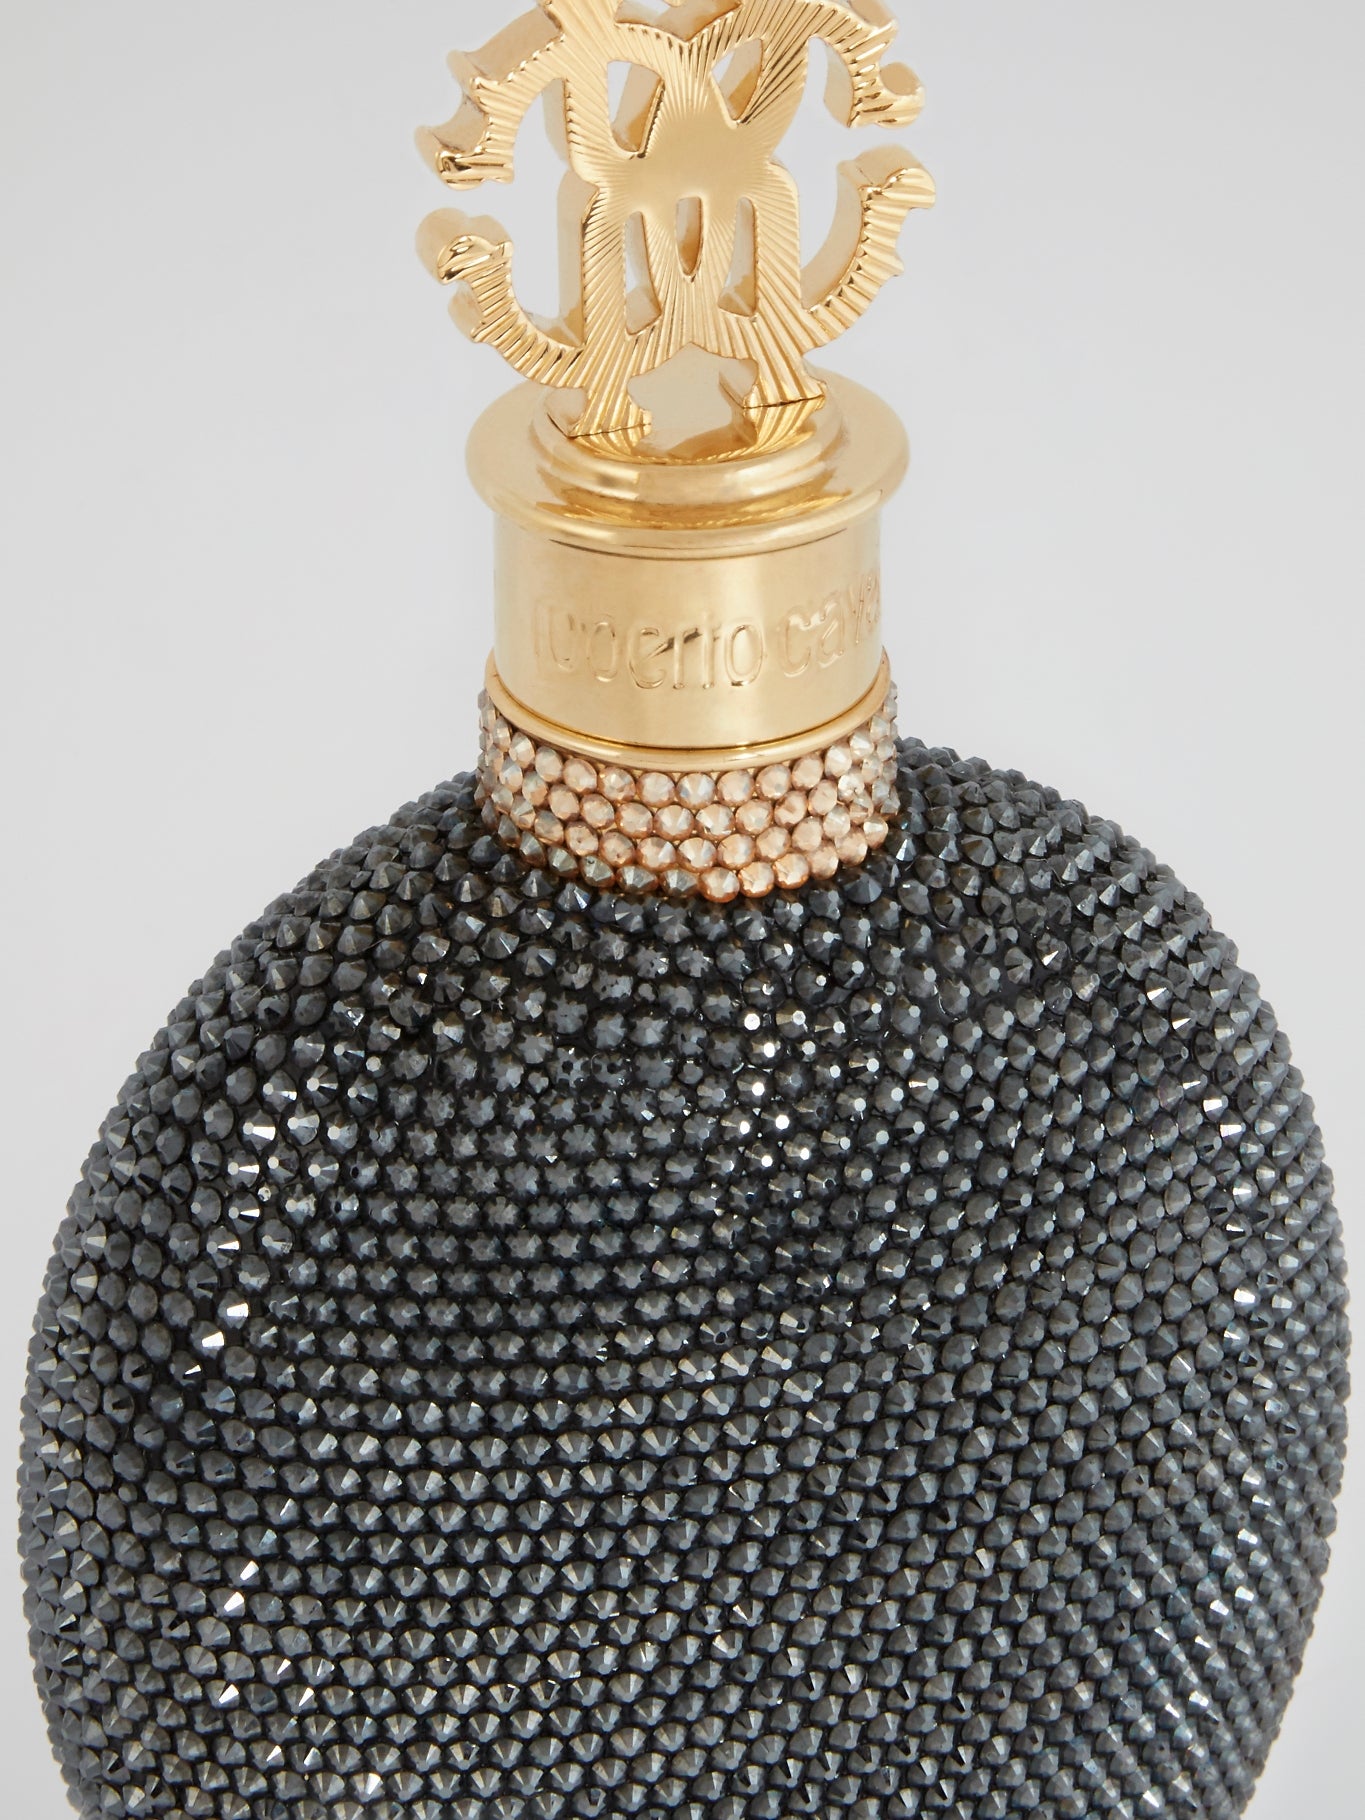 Roberto Cavalli Nero Assoluto Exclusive Edition Eau de Parfum, 75ml Maison-B-More Global Store